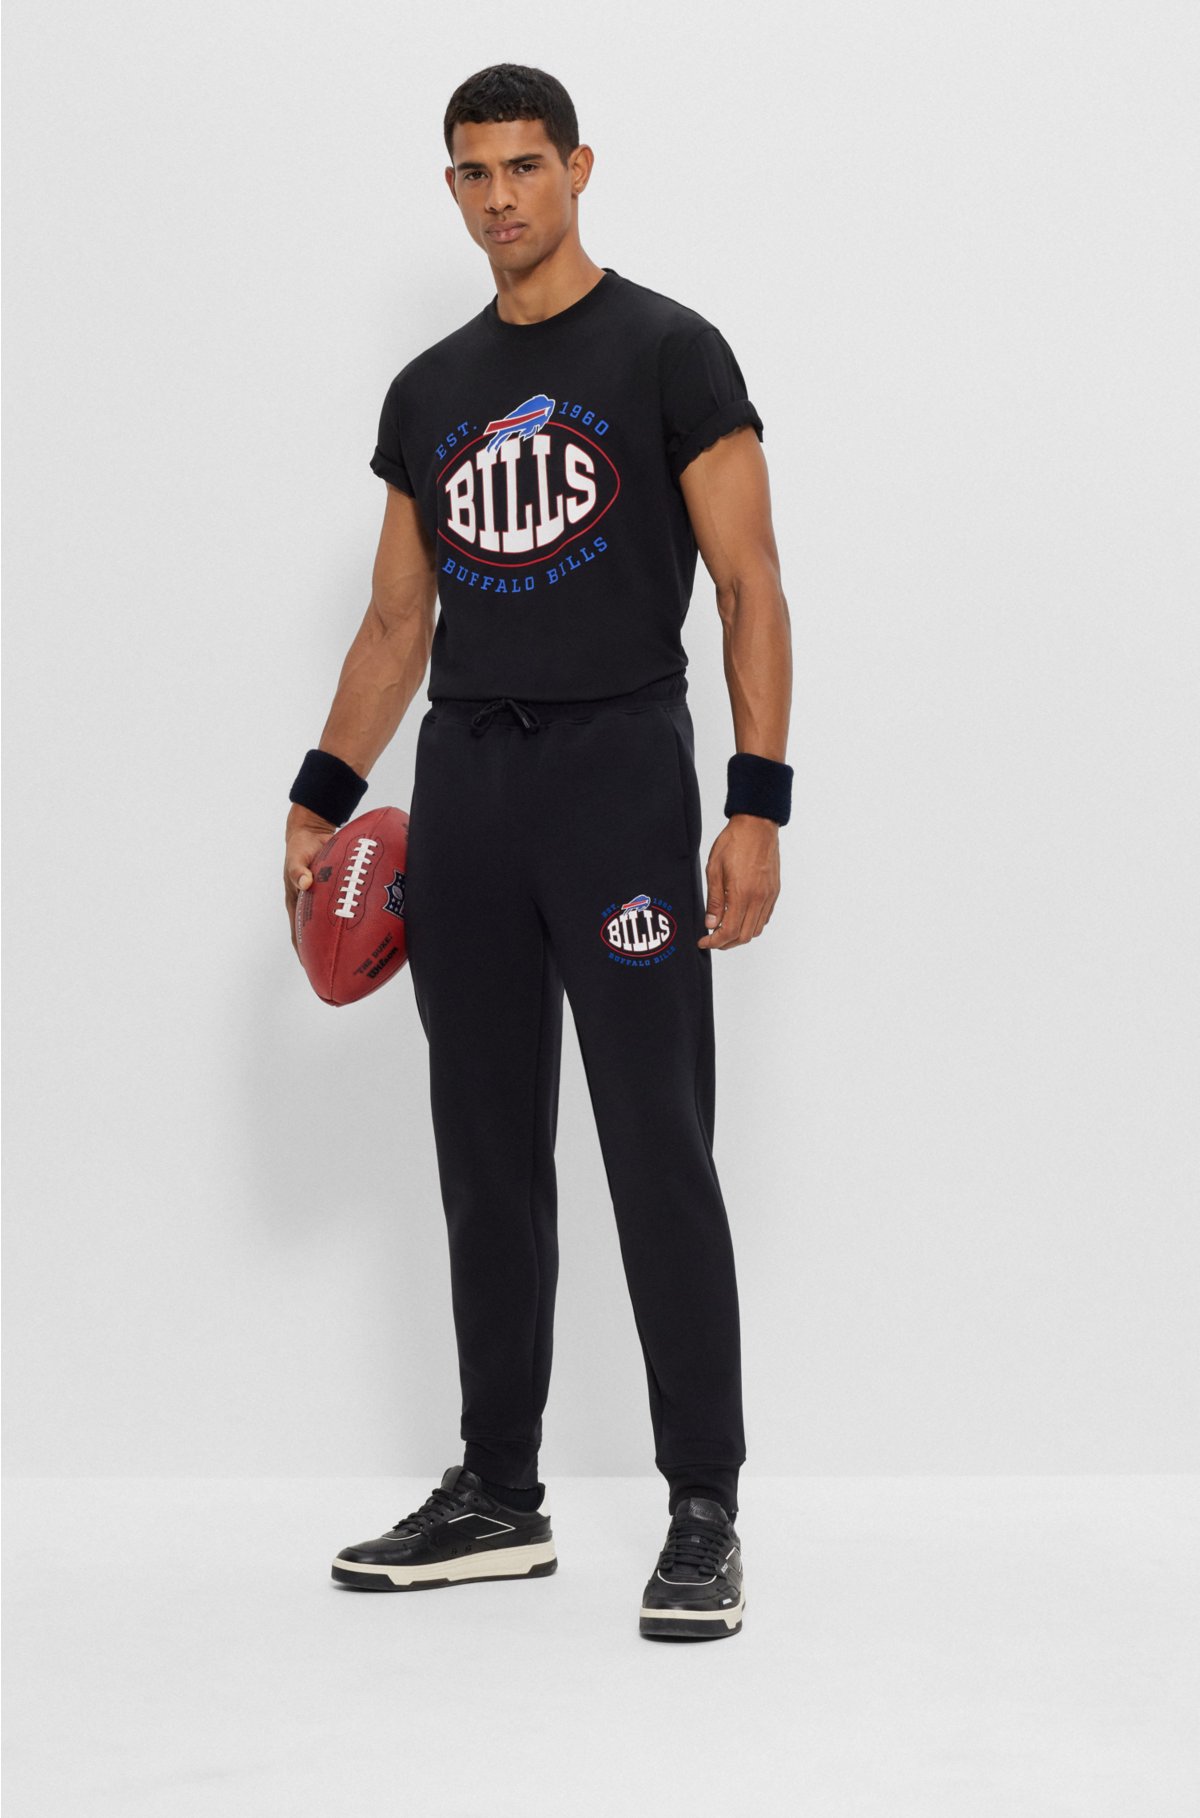 BOSS BOSS x NFL cotton-blend T-shirt with collaborative branding in Cowboys | Men's T-Shirts size M